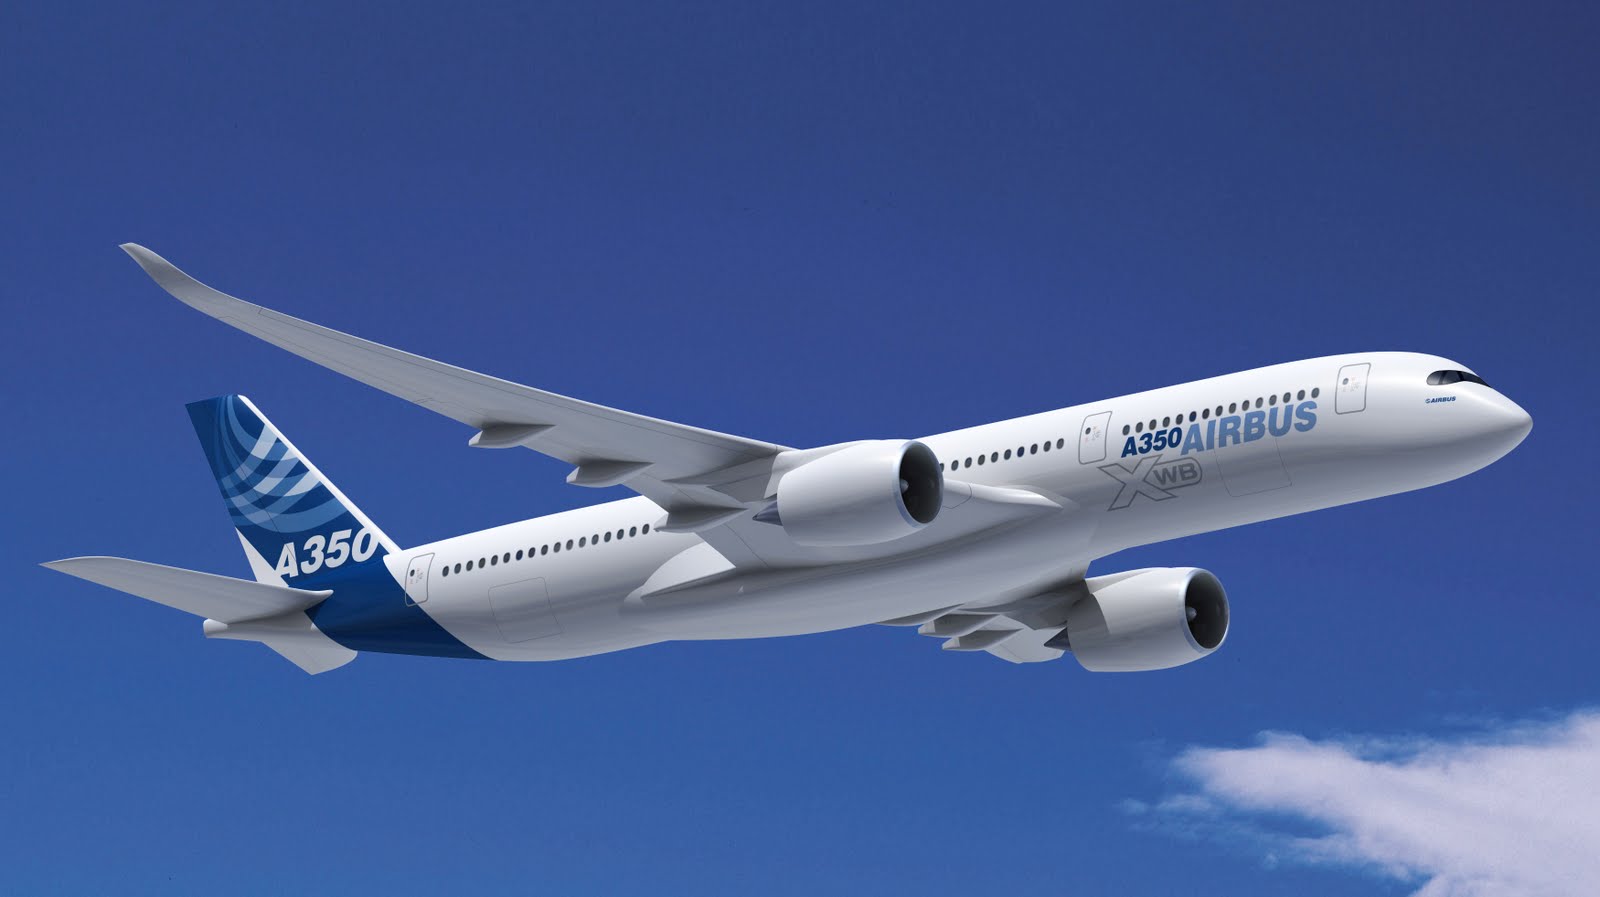 Airbus A350 The New Wide Body Aircraft Passenger Aeronefnet